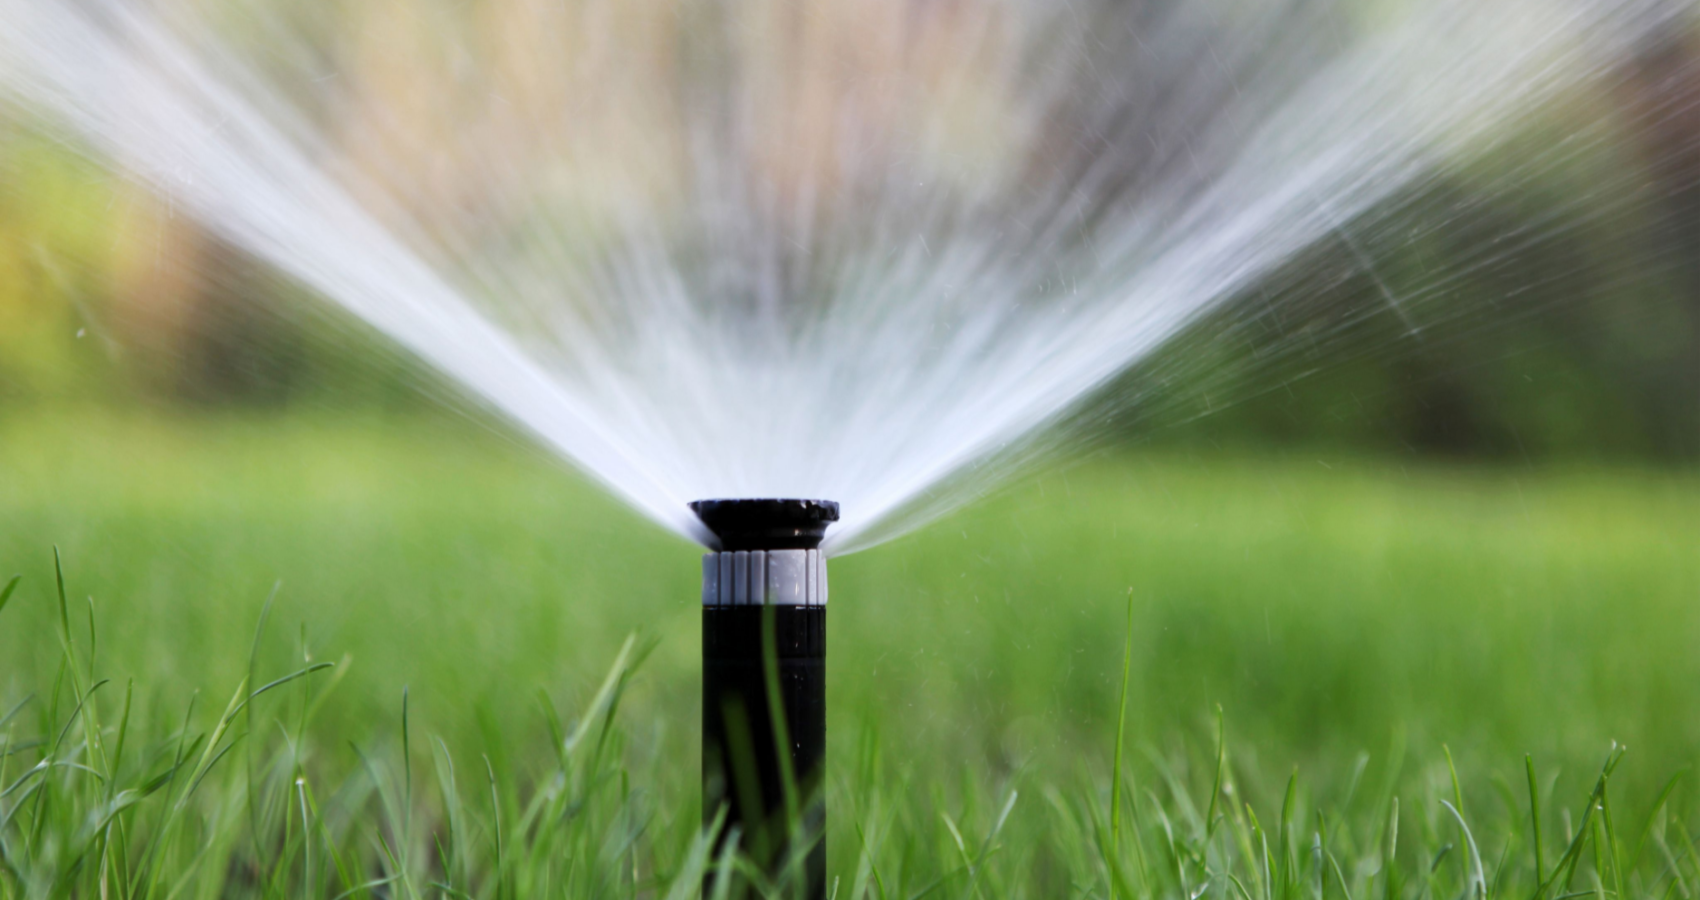 Sprinkler System Installation Country Life Acres, MO | Lawn Care for Country Life Acres, MO Area | Lawn Sprinklers of St. Louis